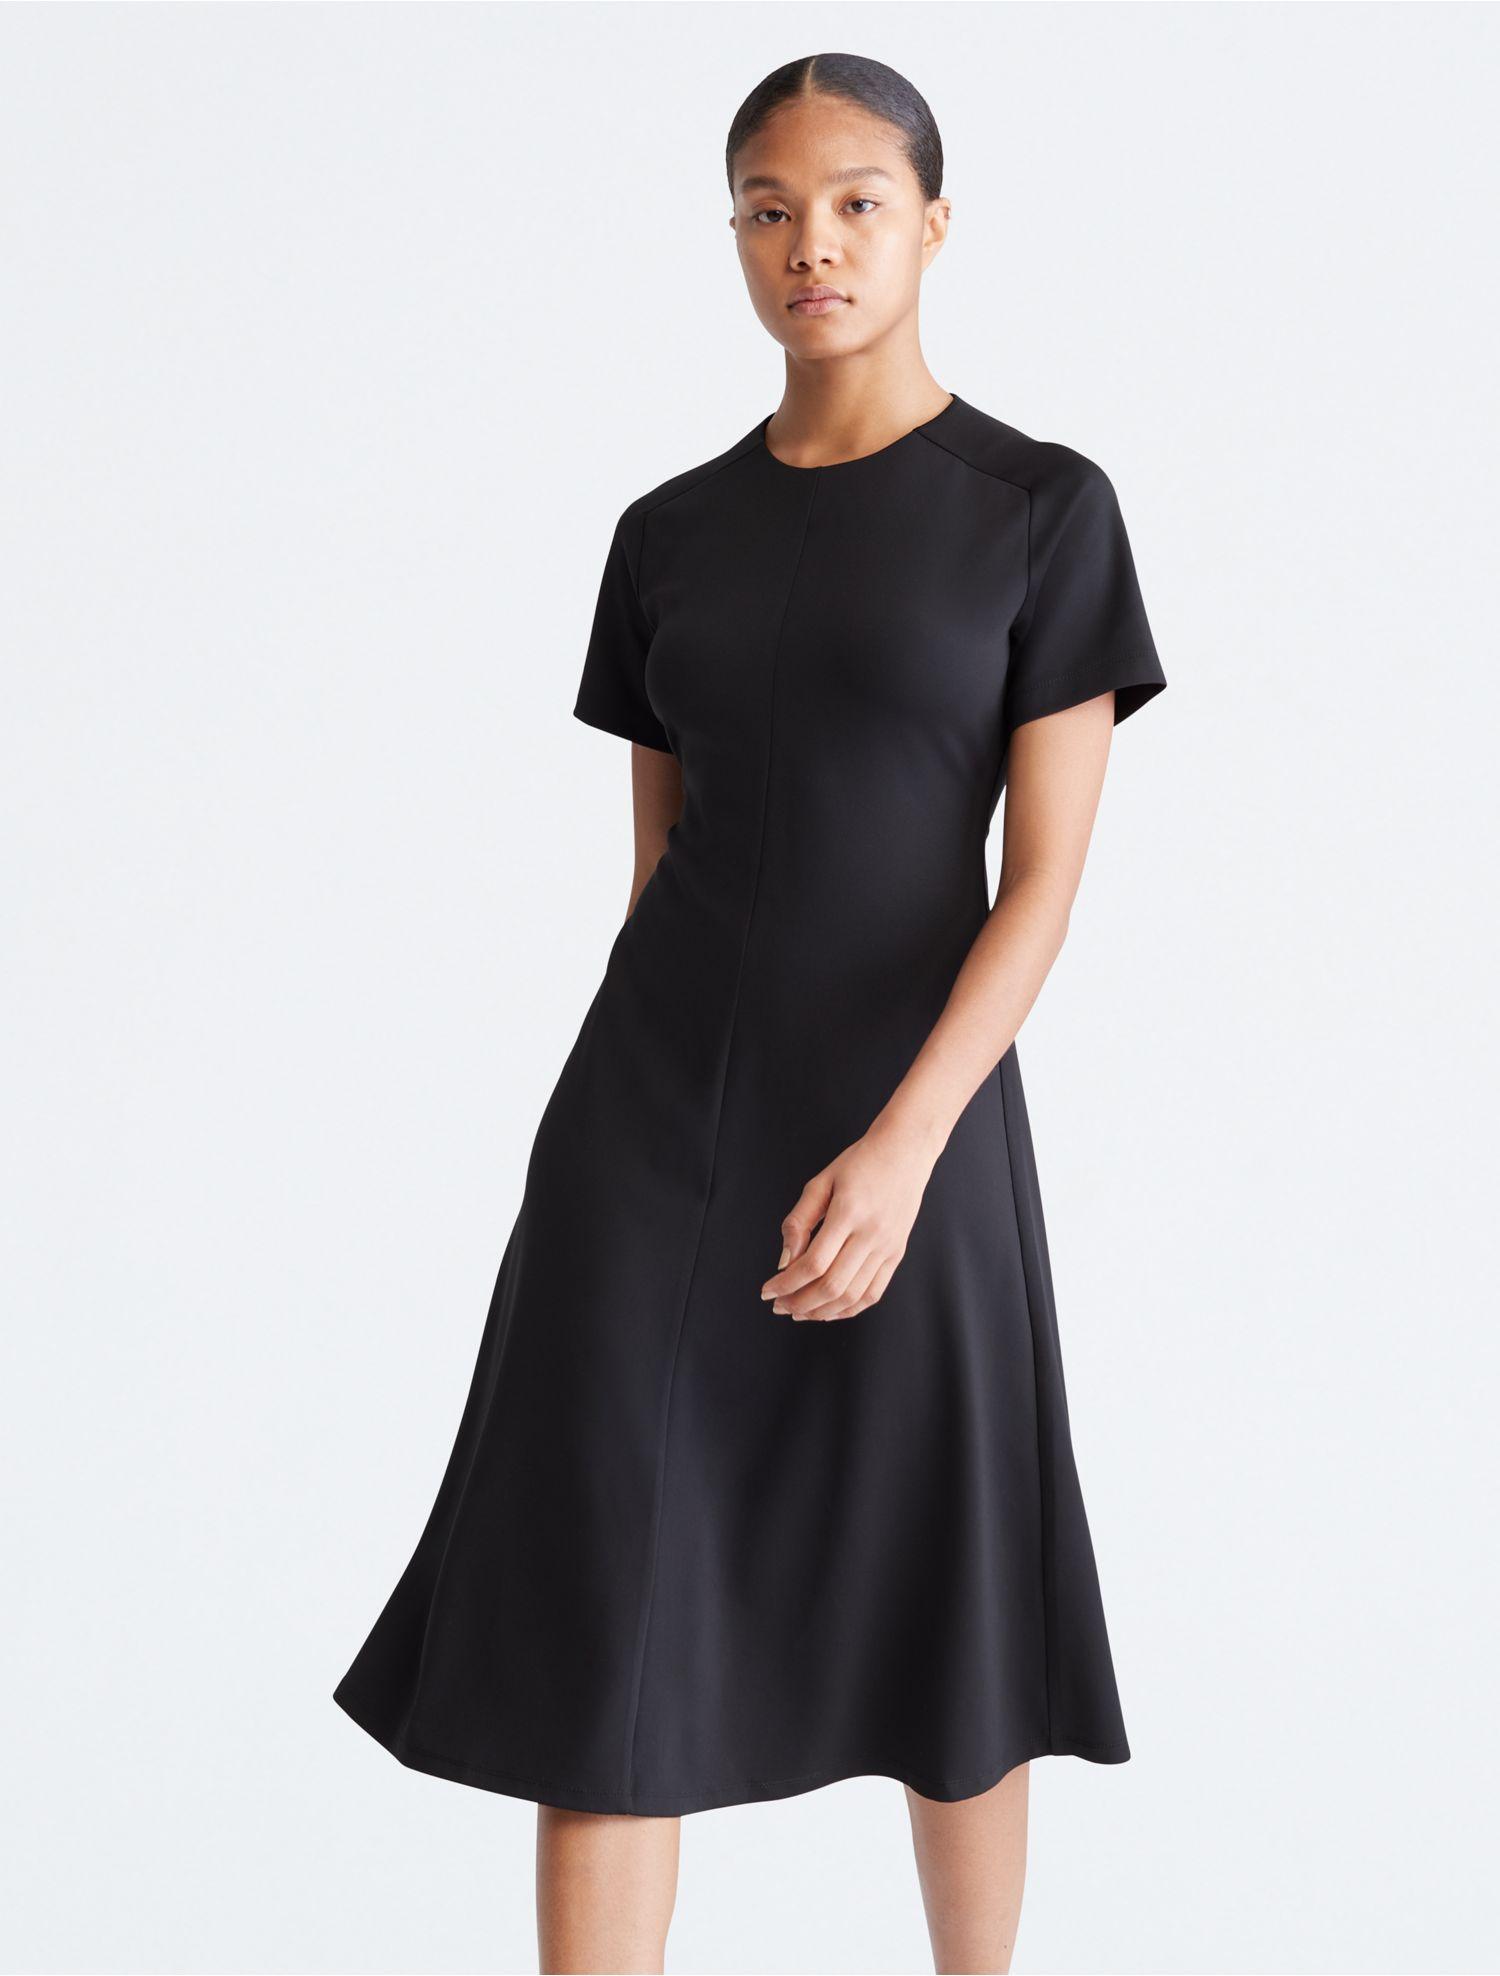 Designer Black Circular/Flare Skirts for Women | Neiman Marcus